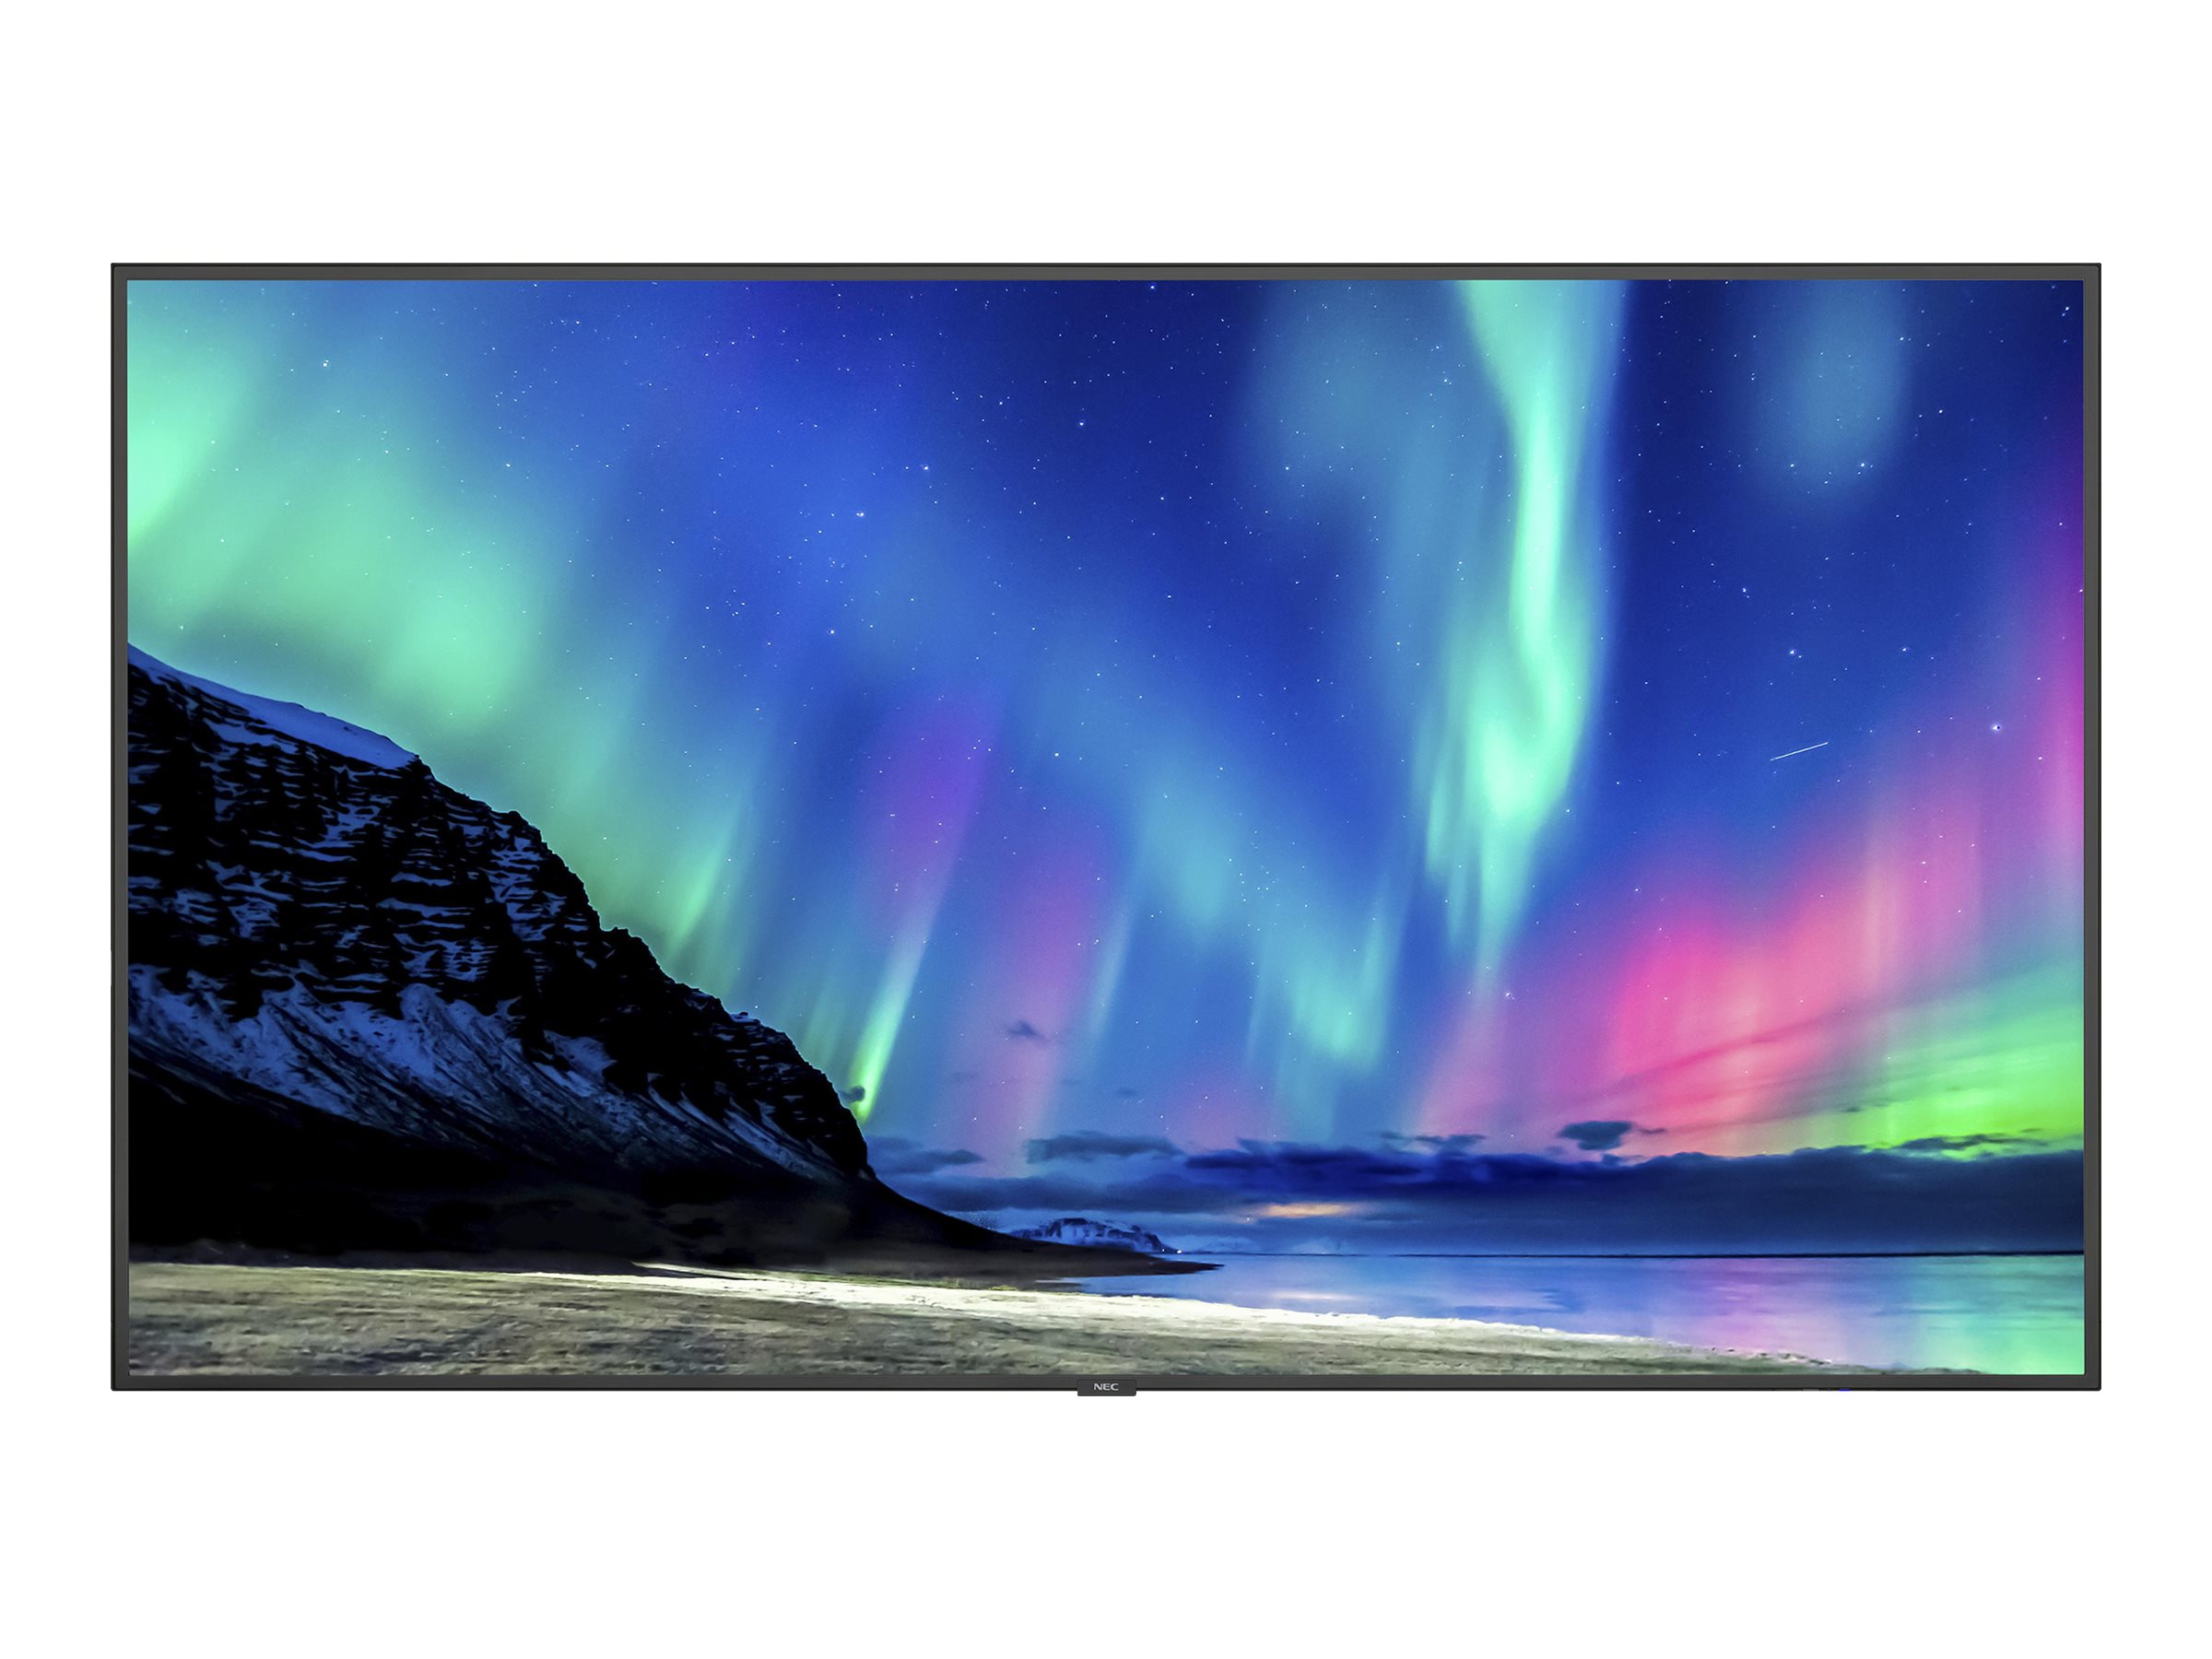 NEC Display MultiSync C751Q - 189.27 cm (75") Diagonalklasse C Series LCD-Display mit LED-Hintergrundbeleuchtung - Digital Signage - 4K UHD (2160p)